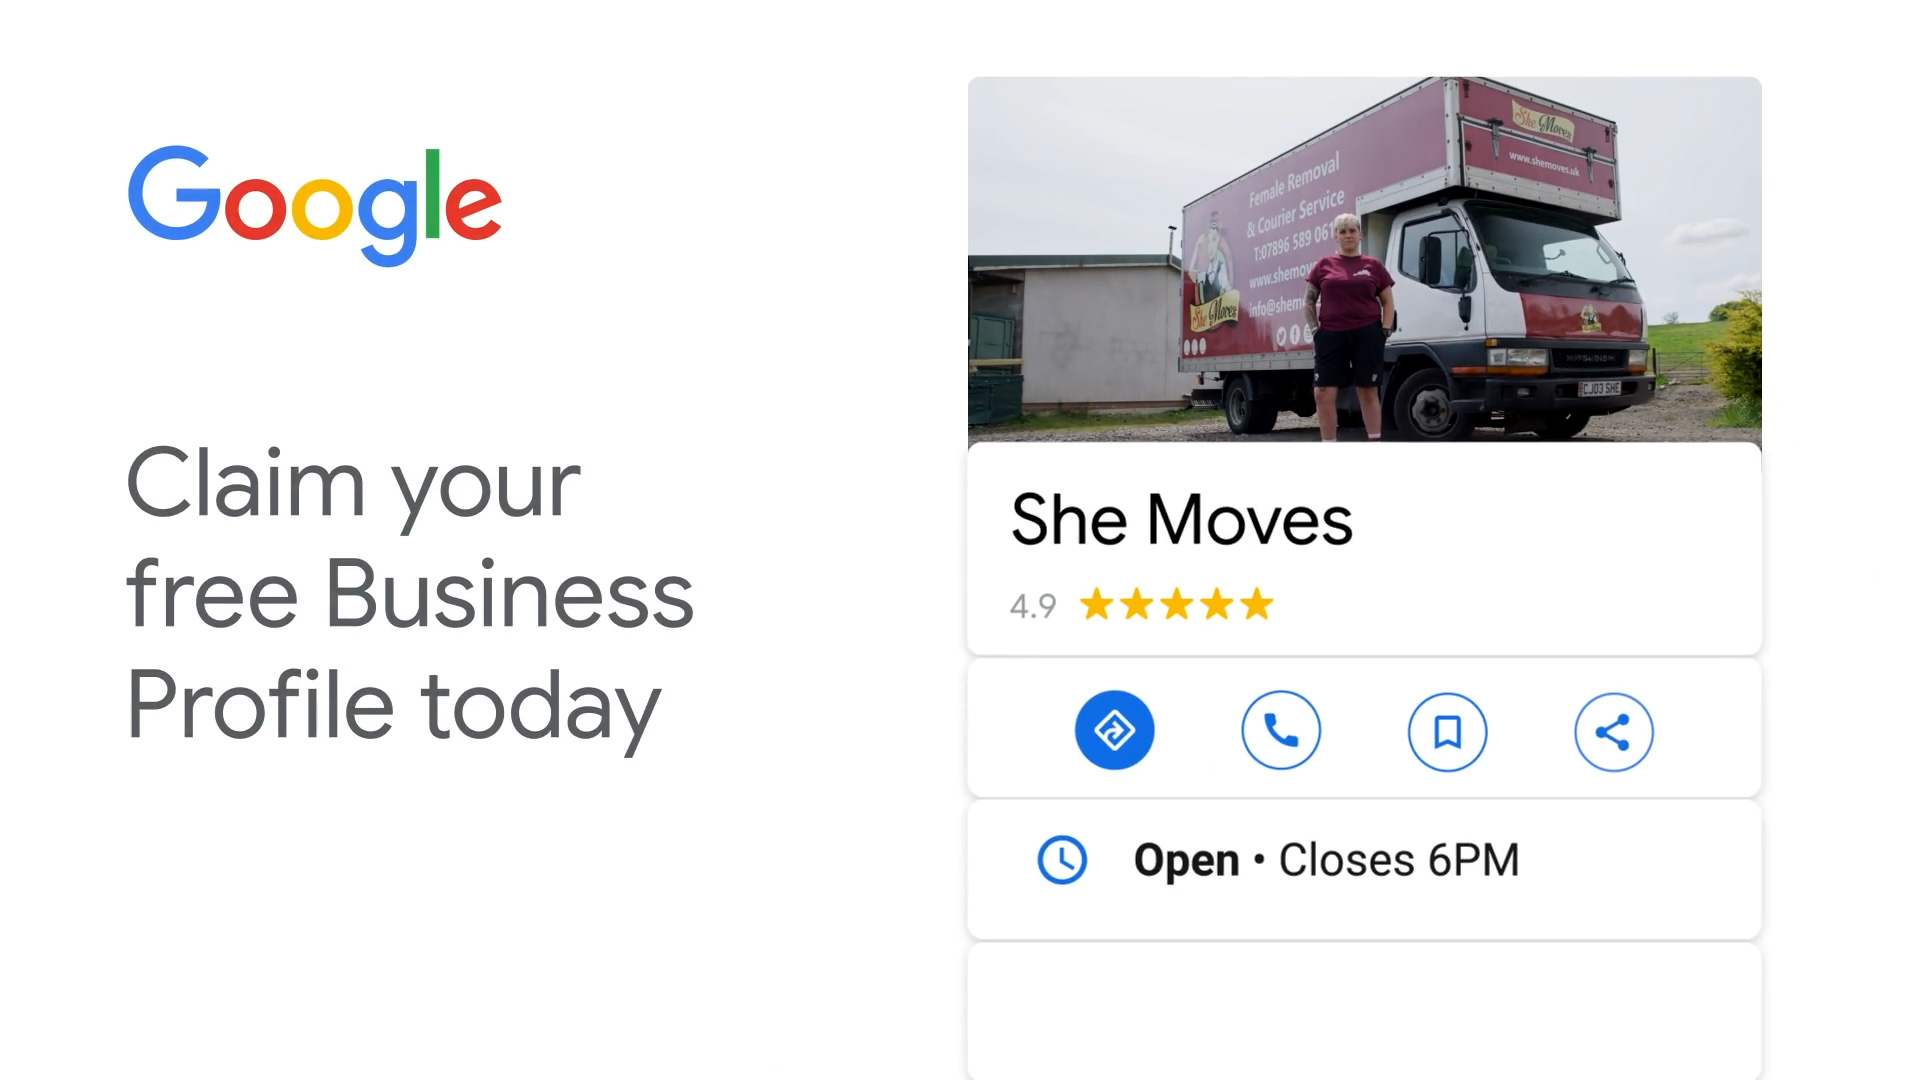 Google Business Profile | She Moves